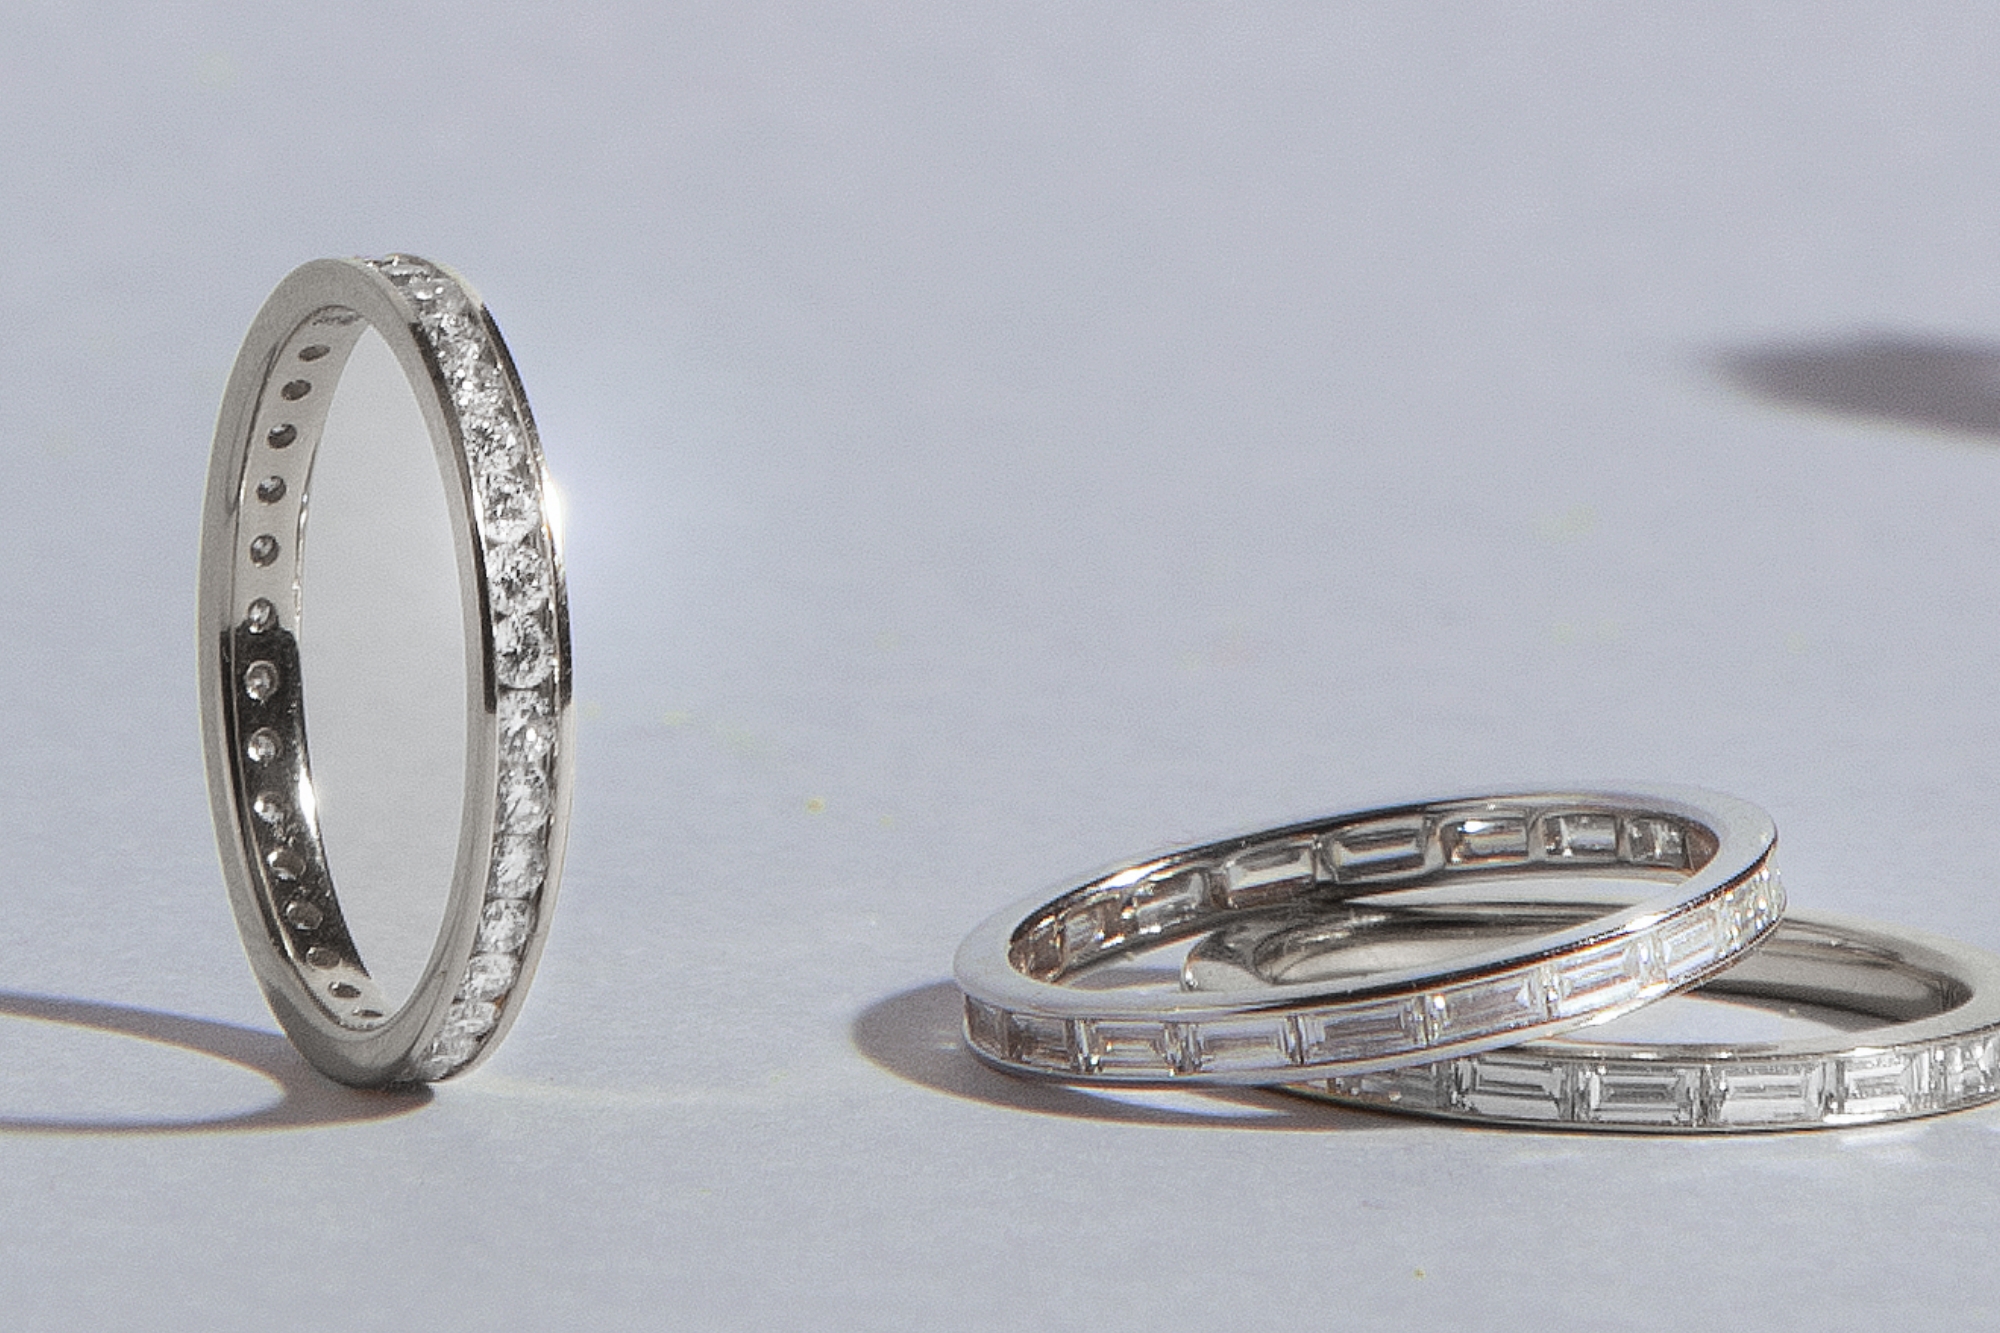 Buy Hdbg Amazing & Beautiful Diamond Stone Original Certified Ring Men  डायमंड रिंग Real Diamond Platinum Ring For Women हीरा रत्न की अंगूठी VVS1  Clarity D Color Heera Stone डायमंड स्टोन Birthstone